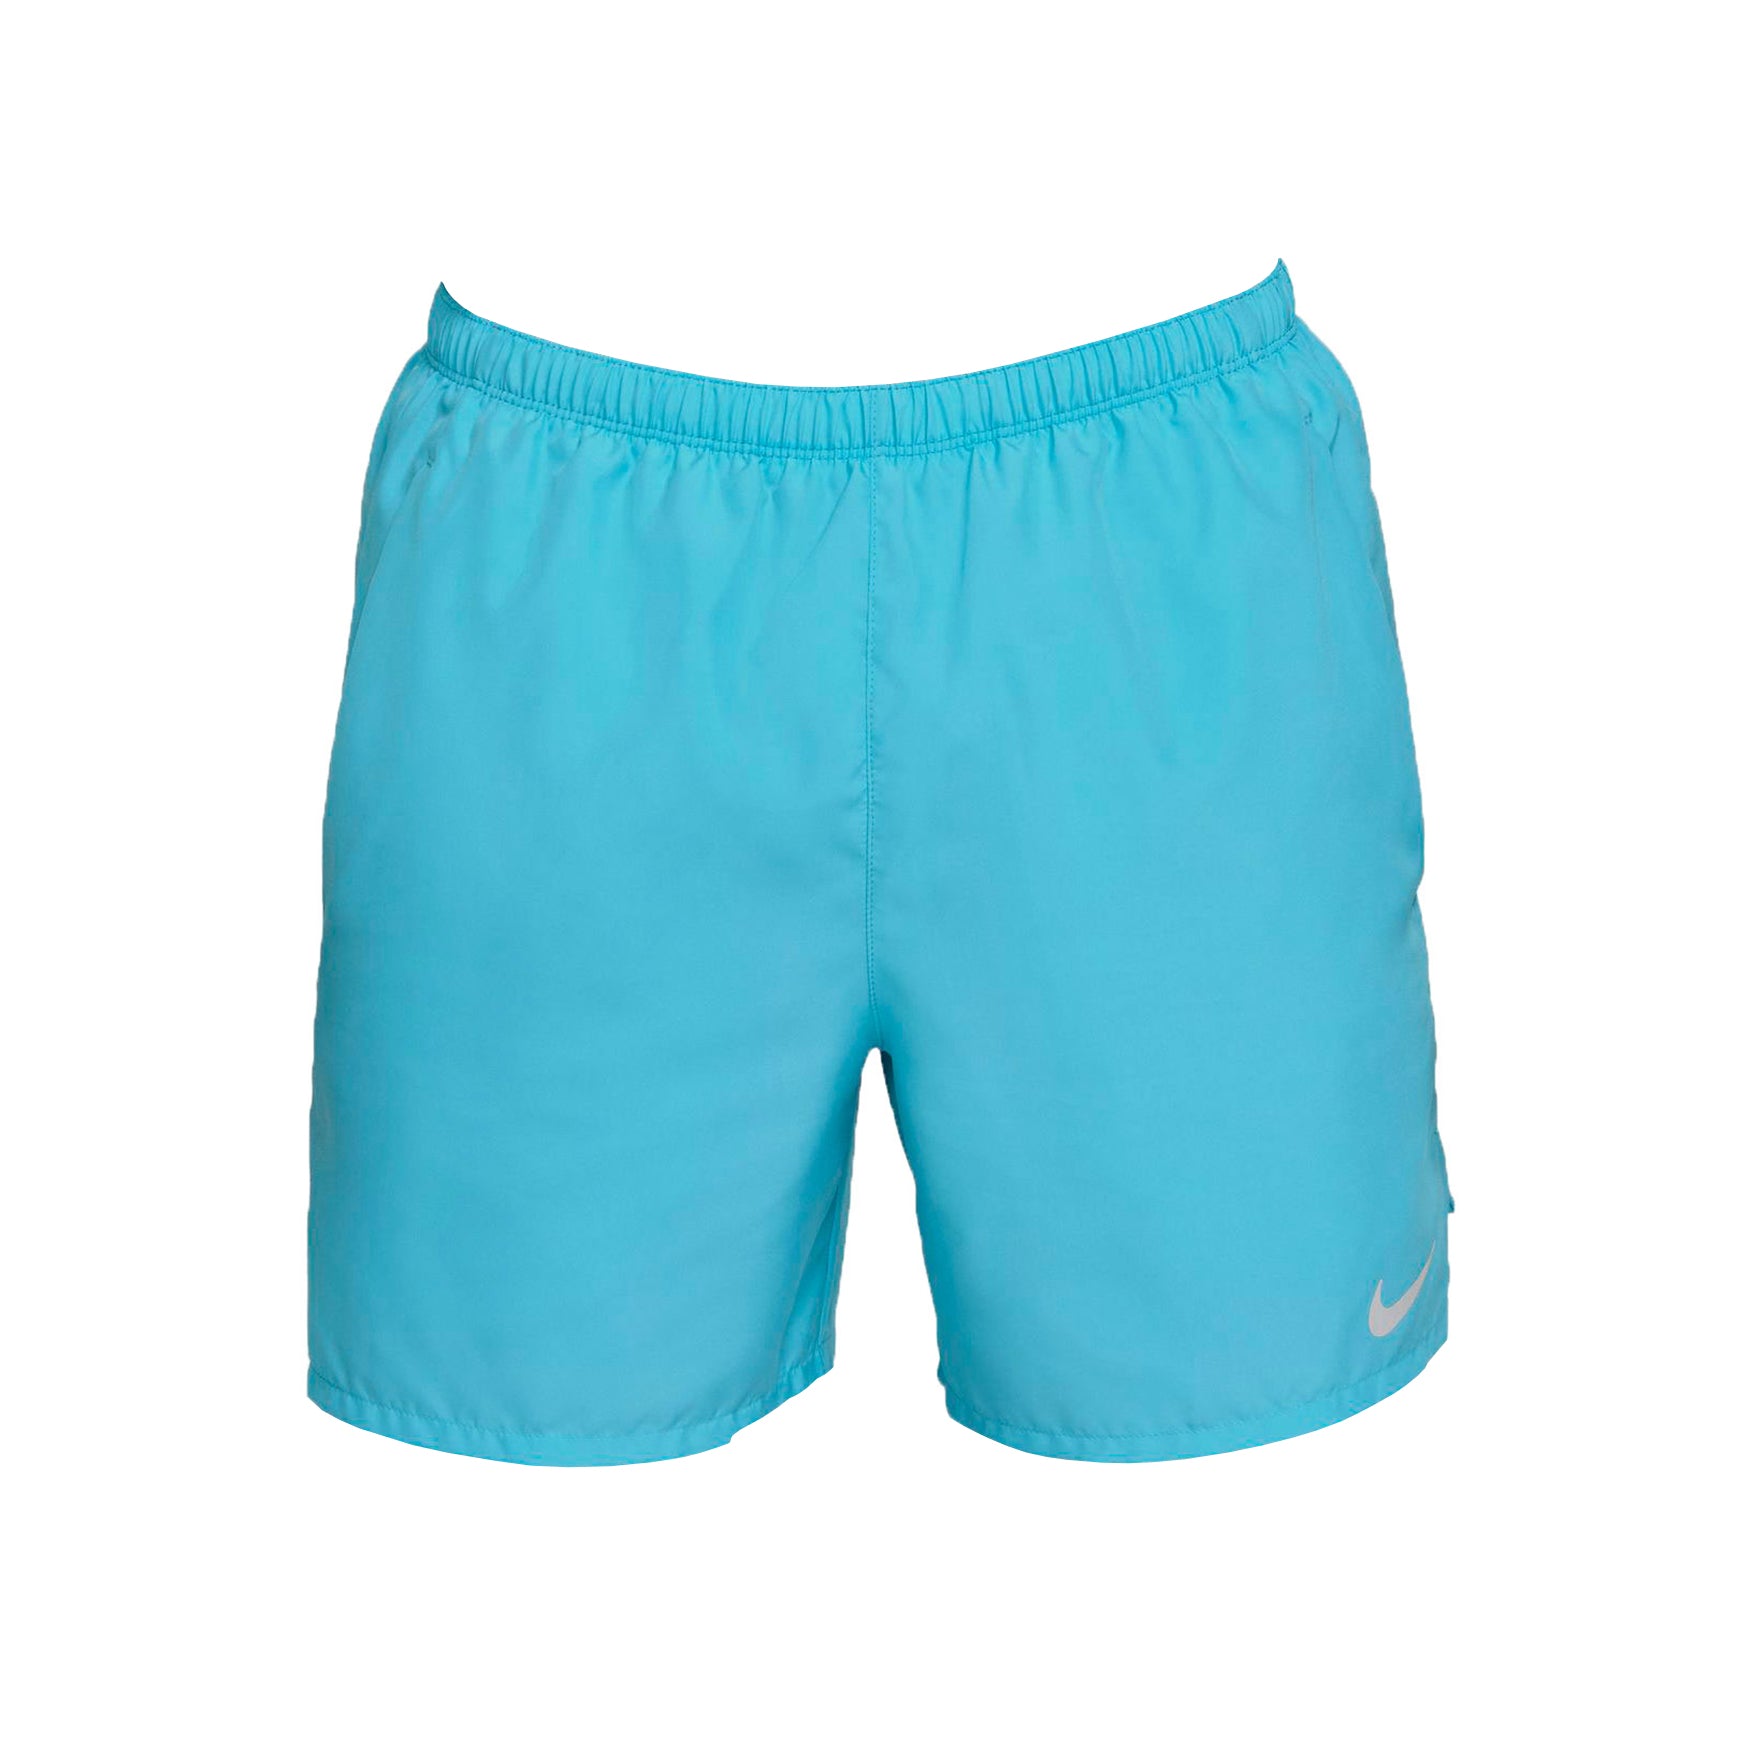 Nike Challenger Running Division Shorts (Blue)